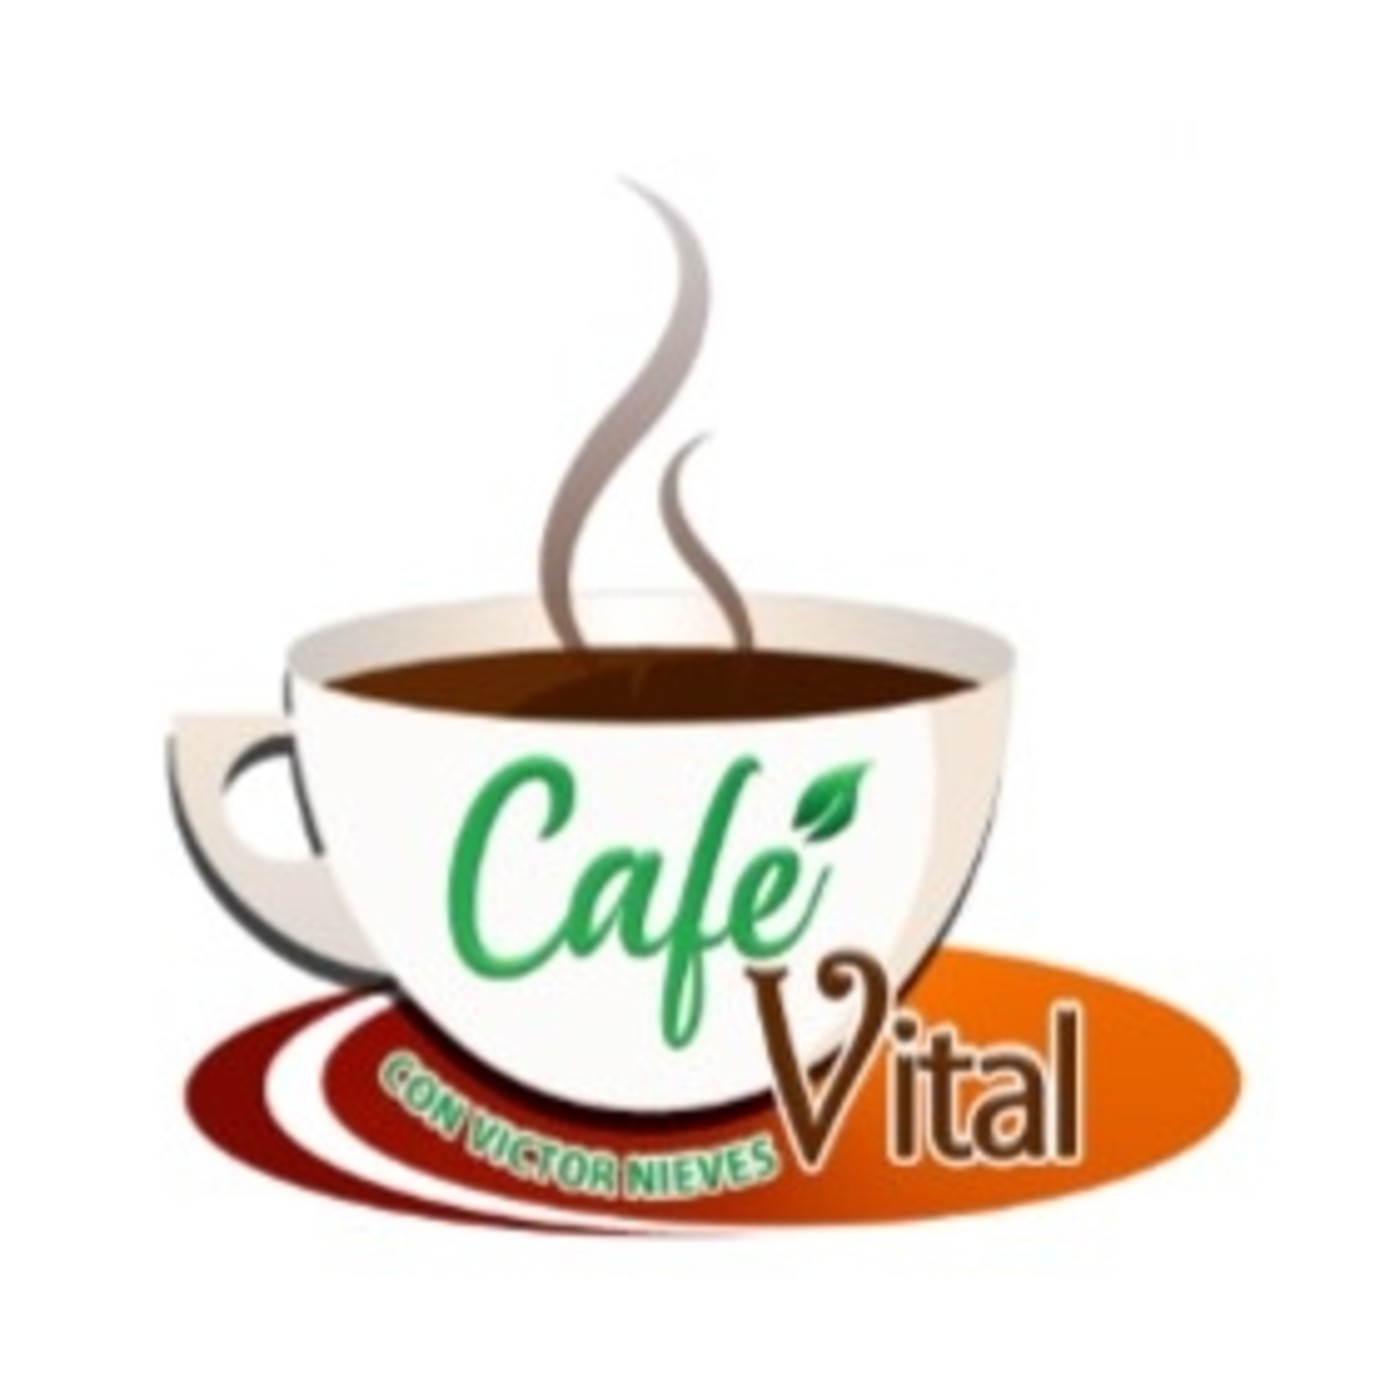 Cafe vital 19-10-2020